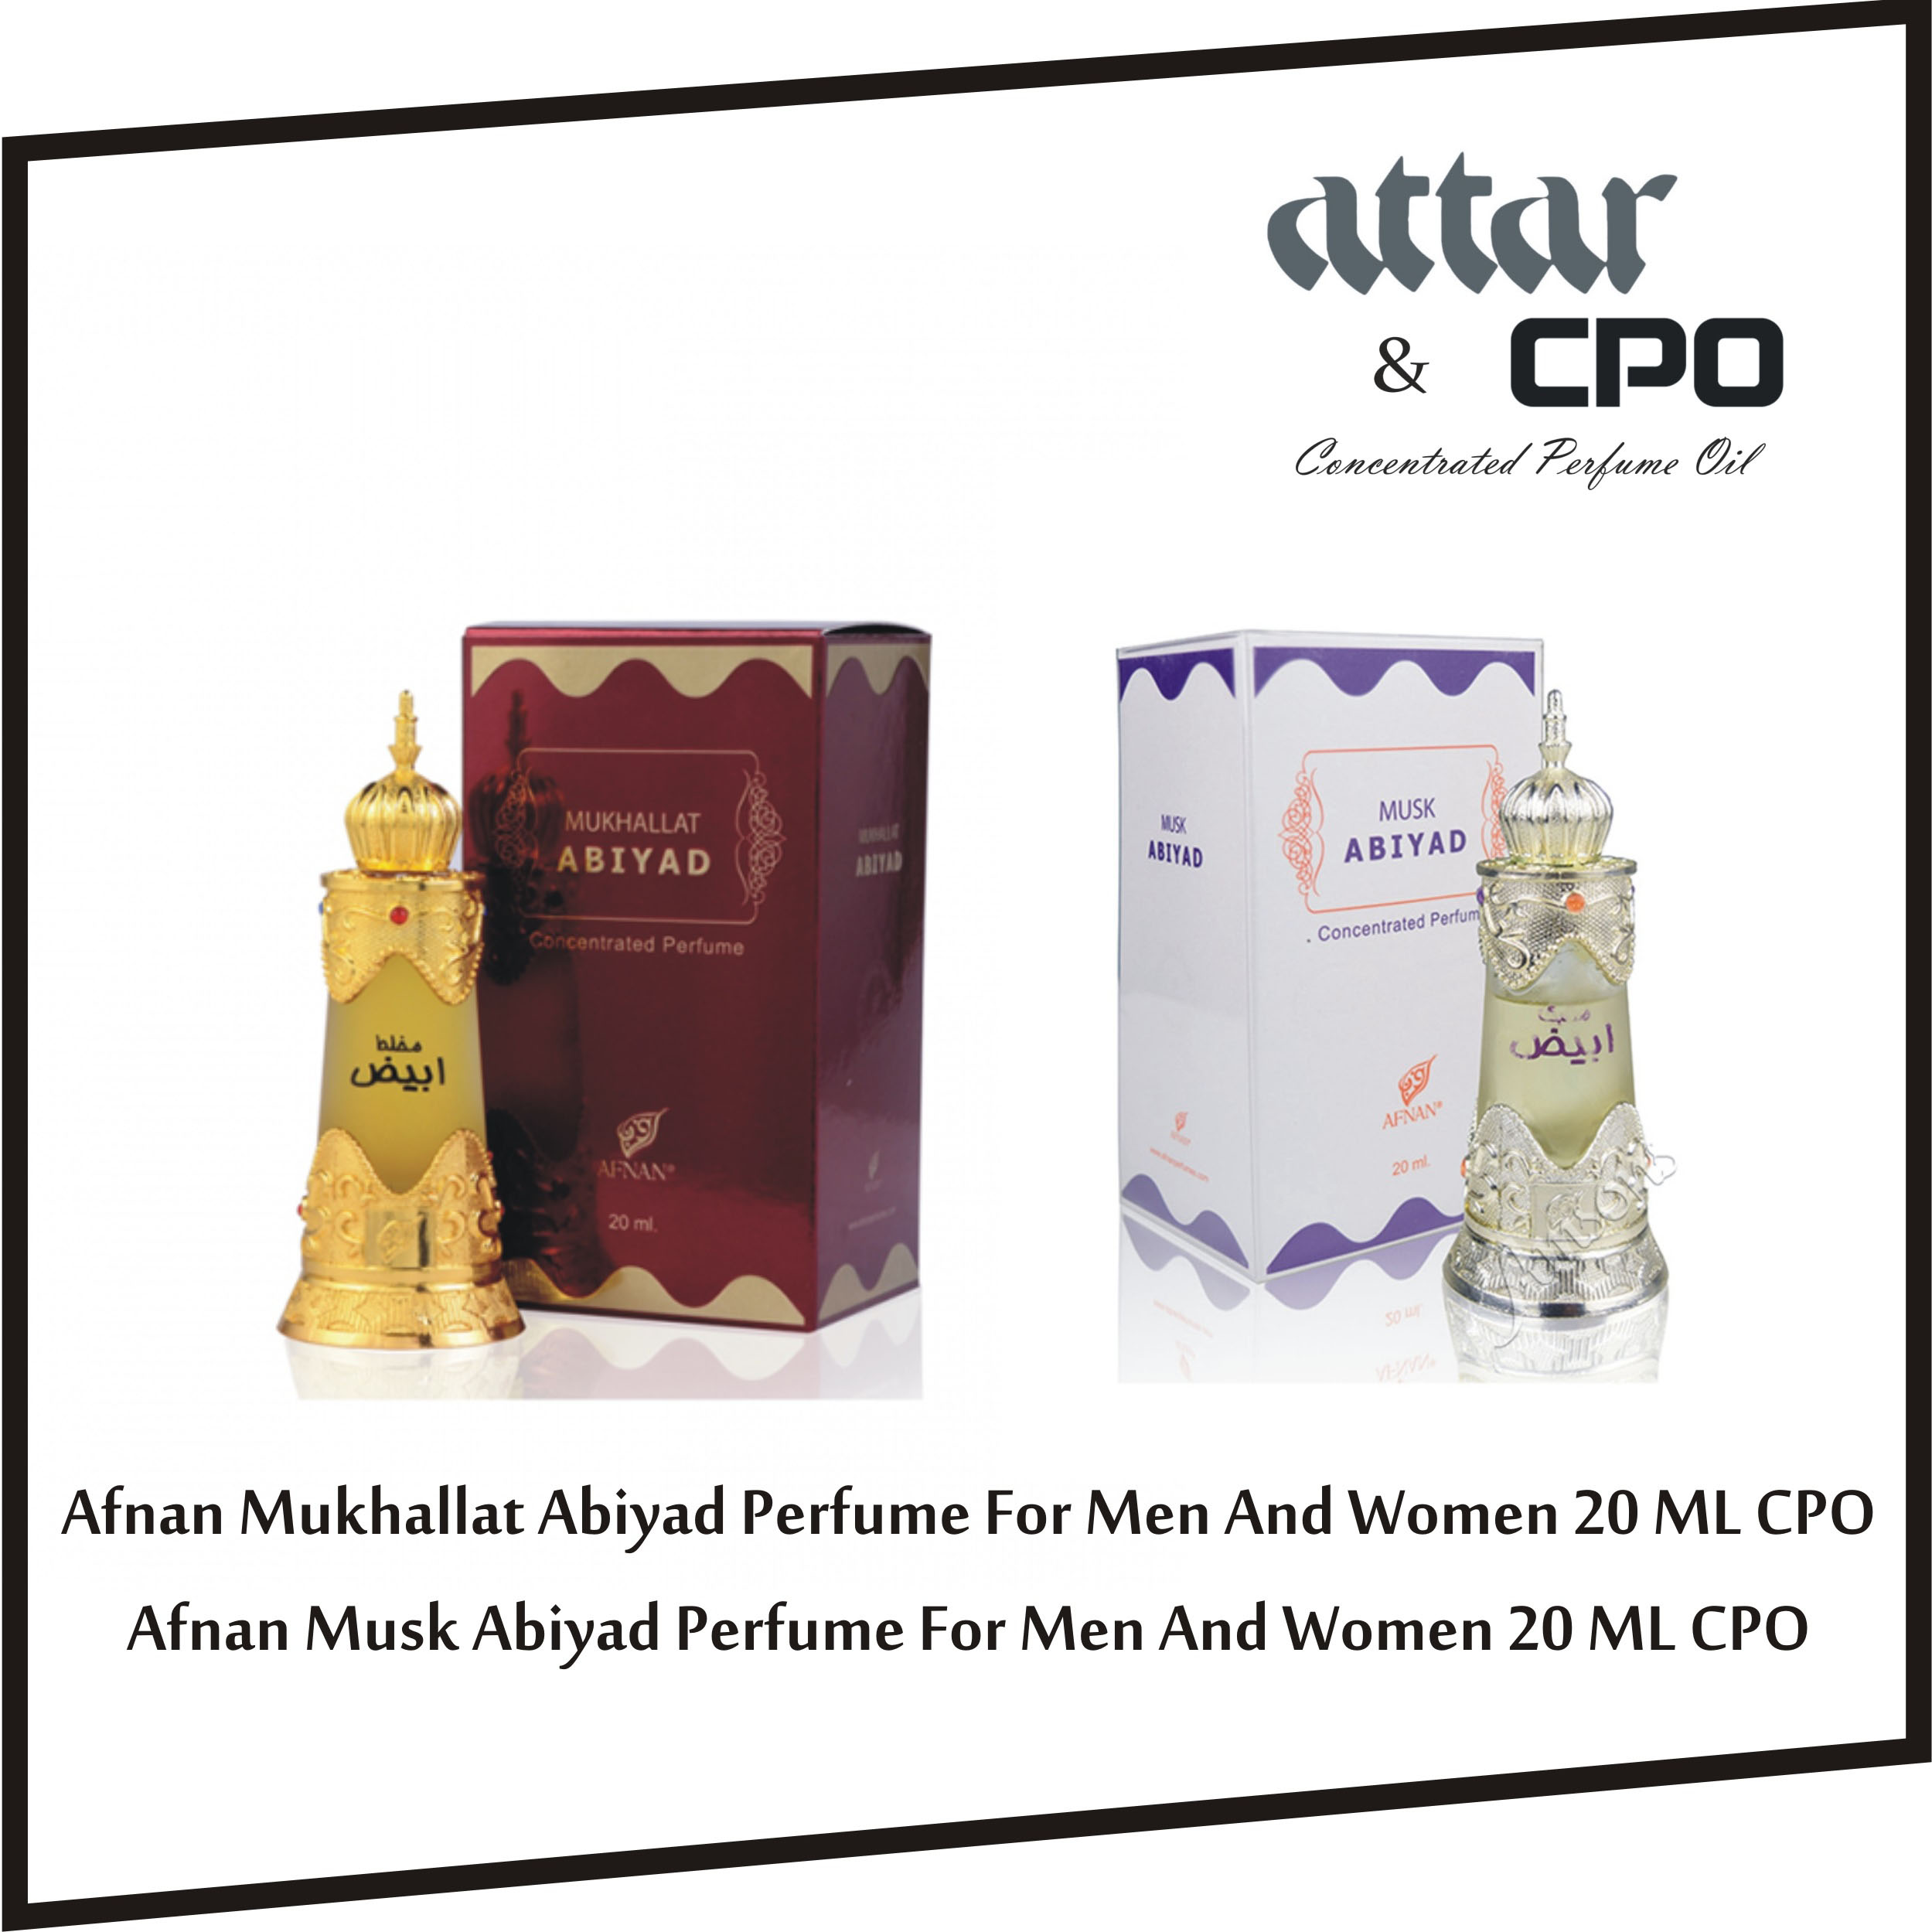 afnan-musk-abiyad-perfume-for-men-and-women-mukhallat